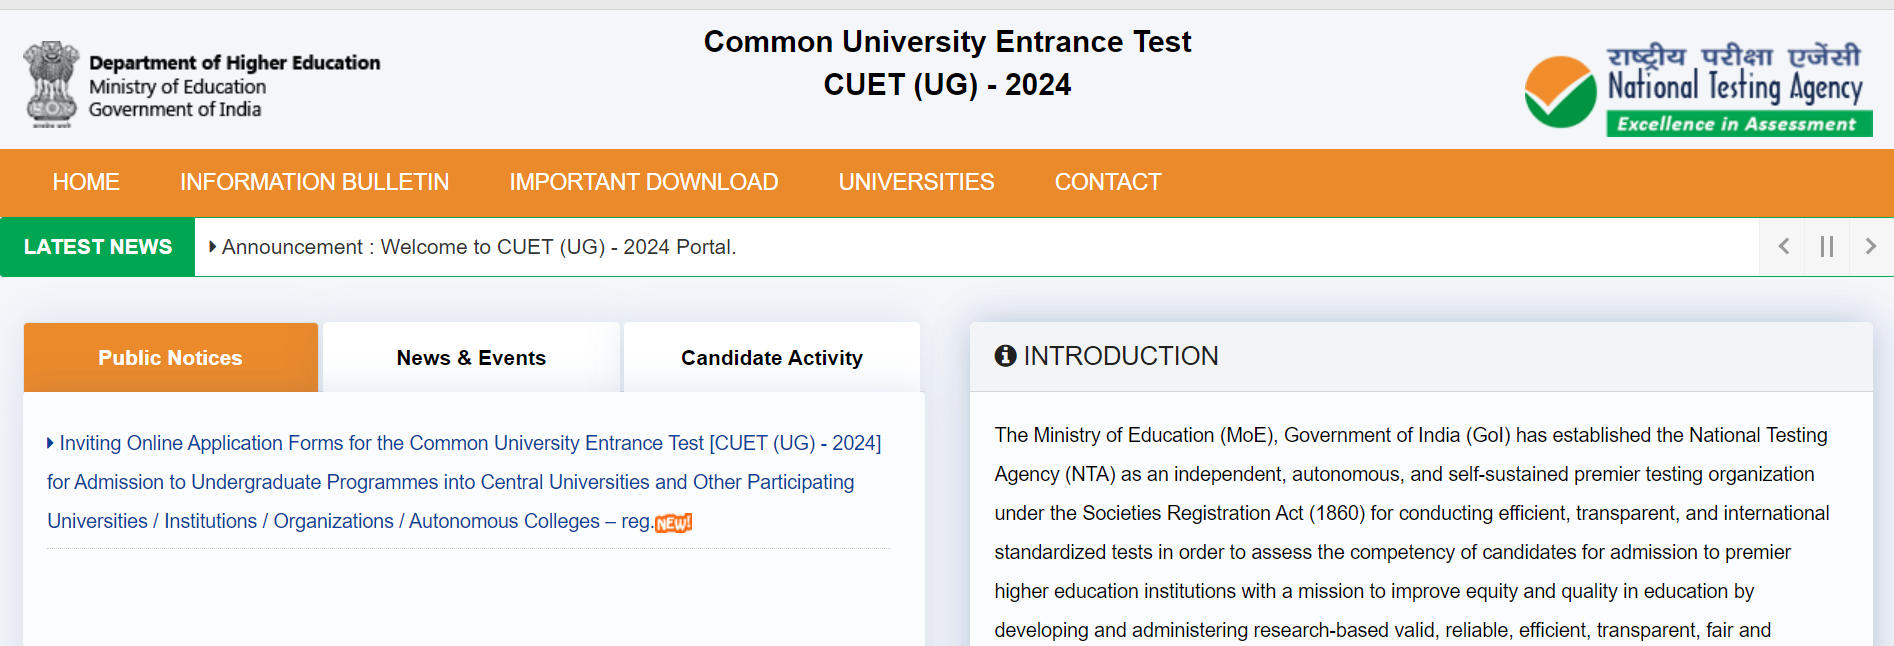 CUET UG 2024- Registration, Application Form, Information Bulletin